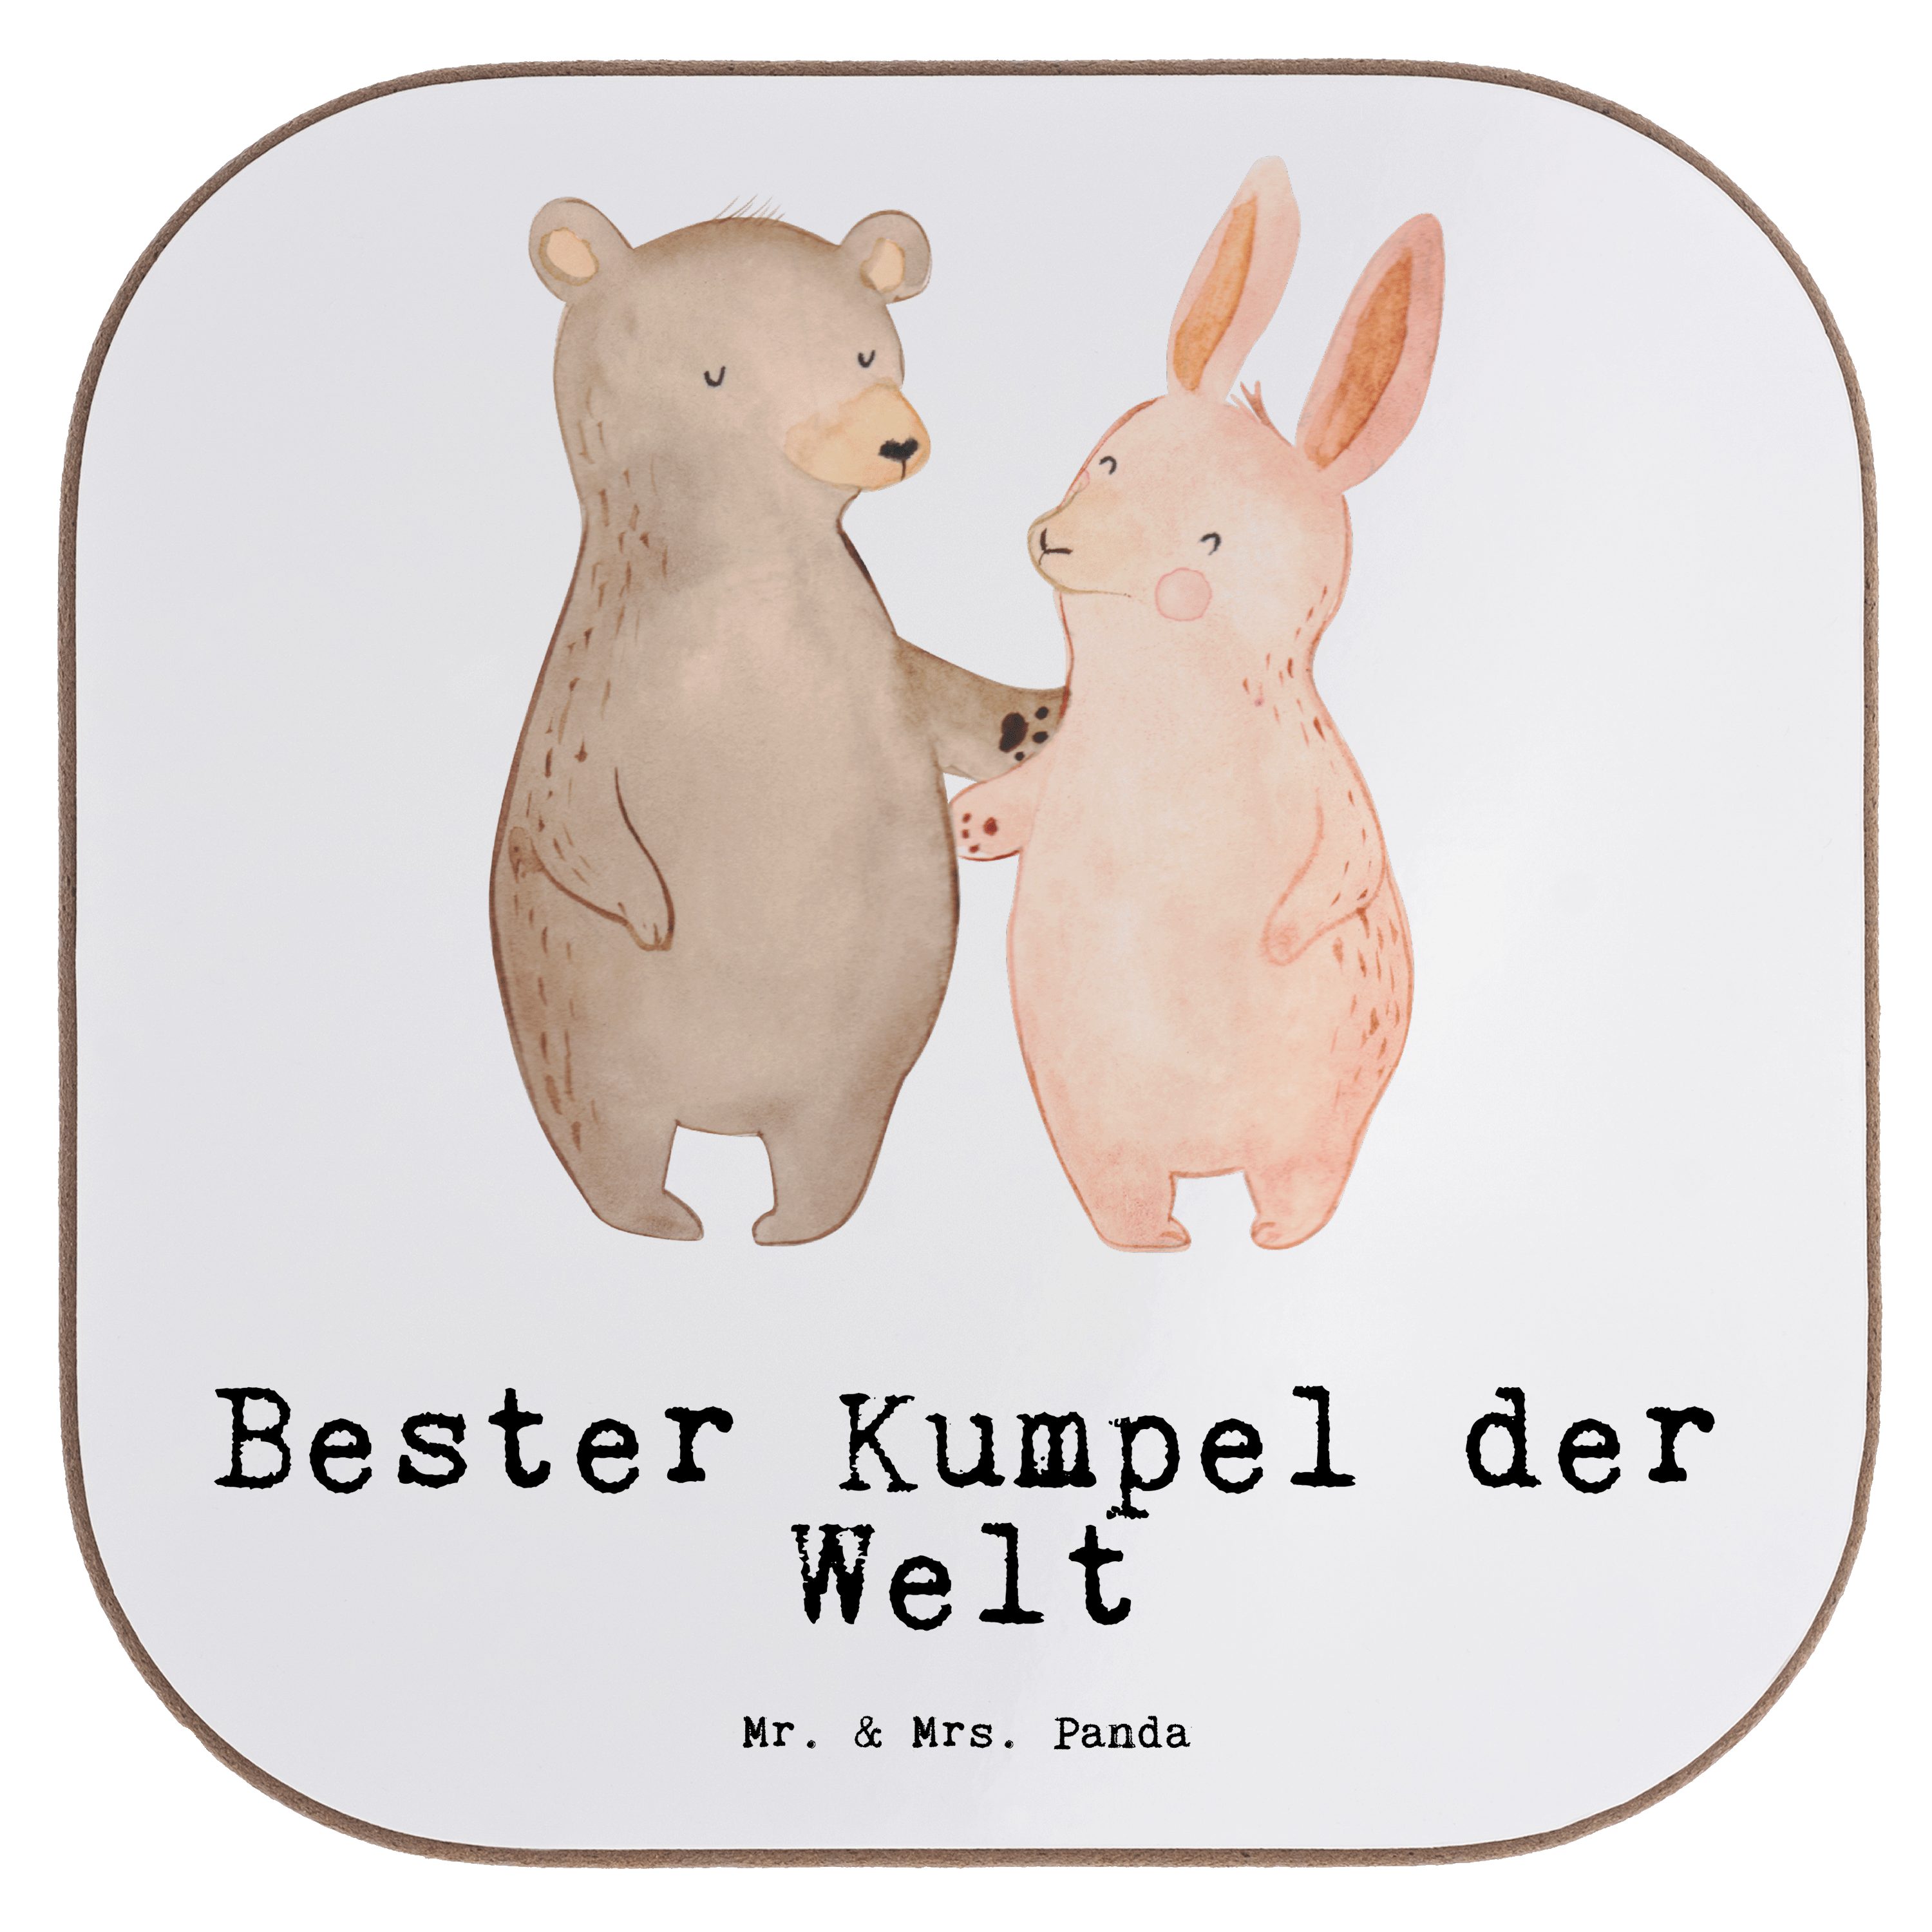 Mr. & Mrs. Panda Getränkeuntersetzer Hase Bester Kumpel der Welt - Weiß - Geschenk, Untersetzer Gläser, be, 1-tlg.